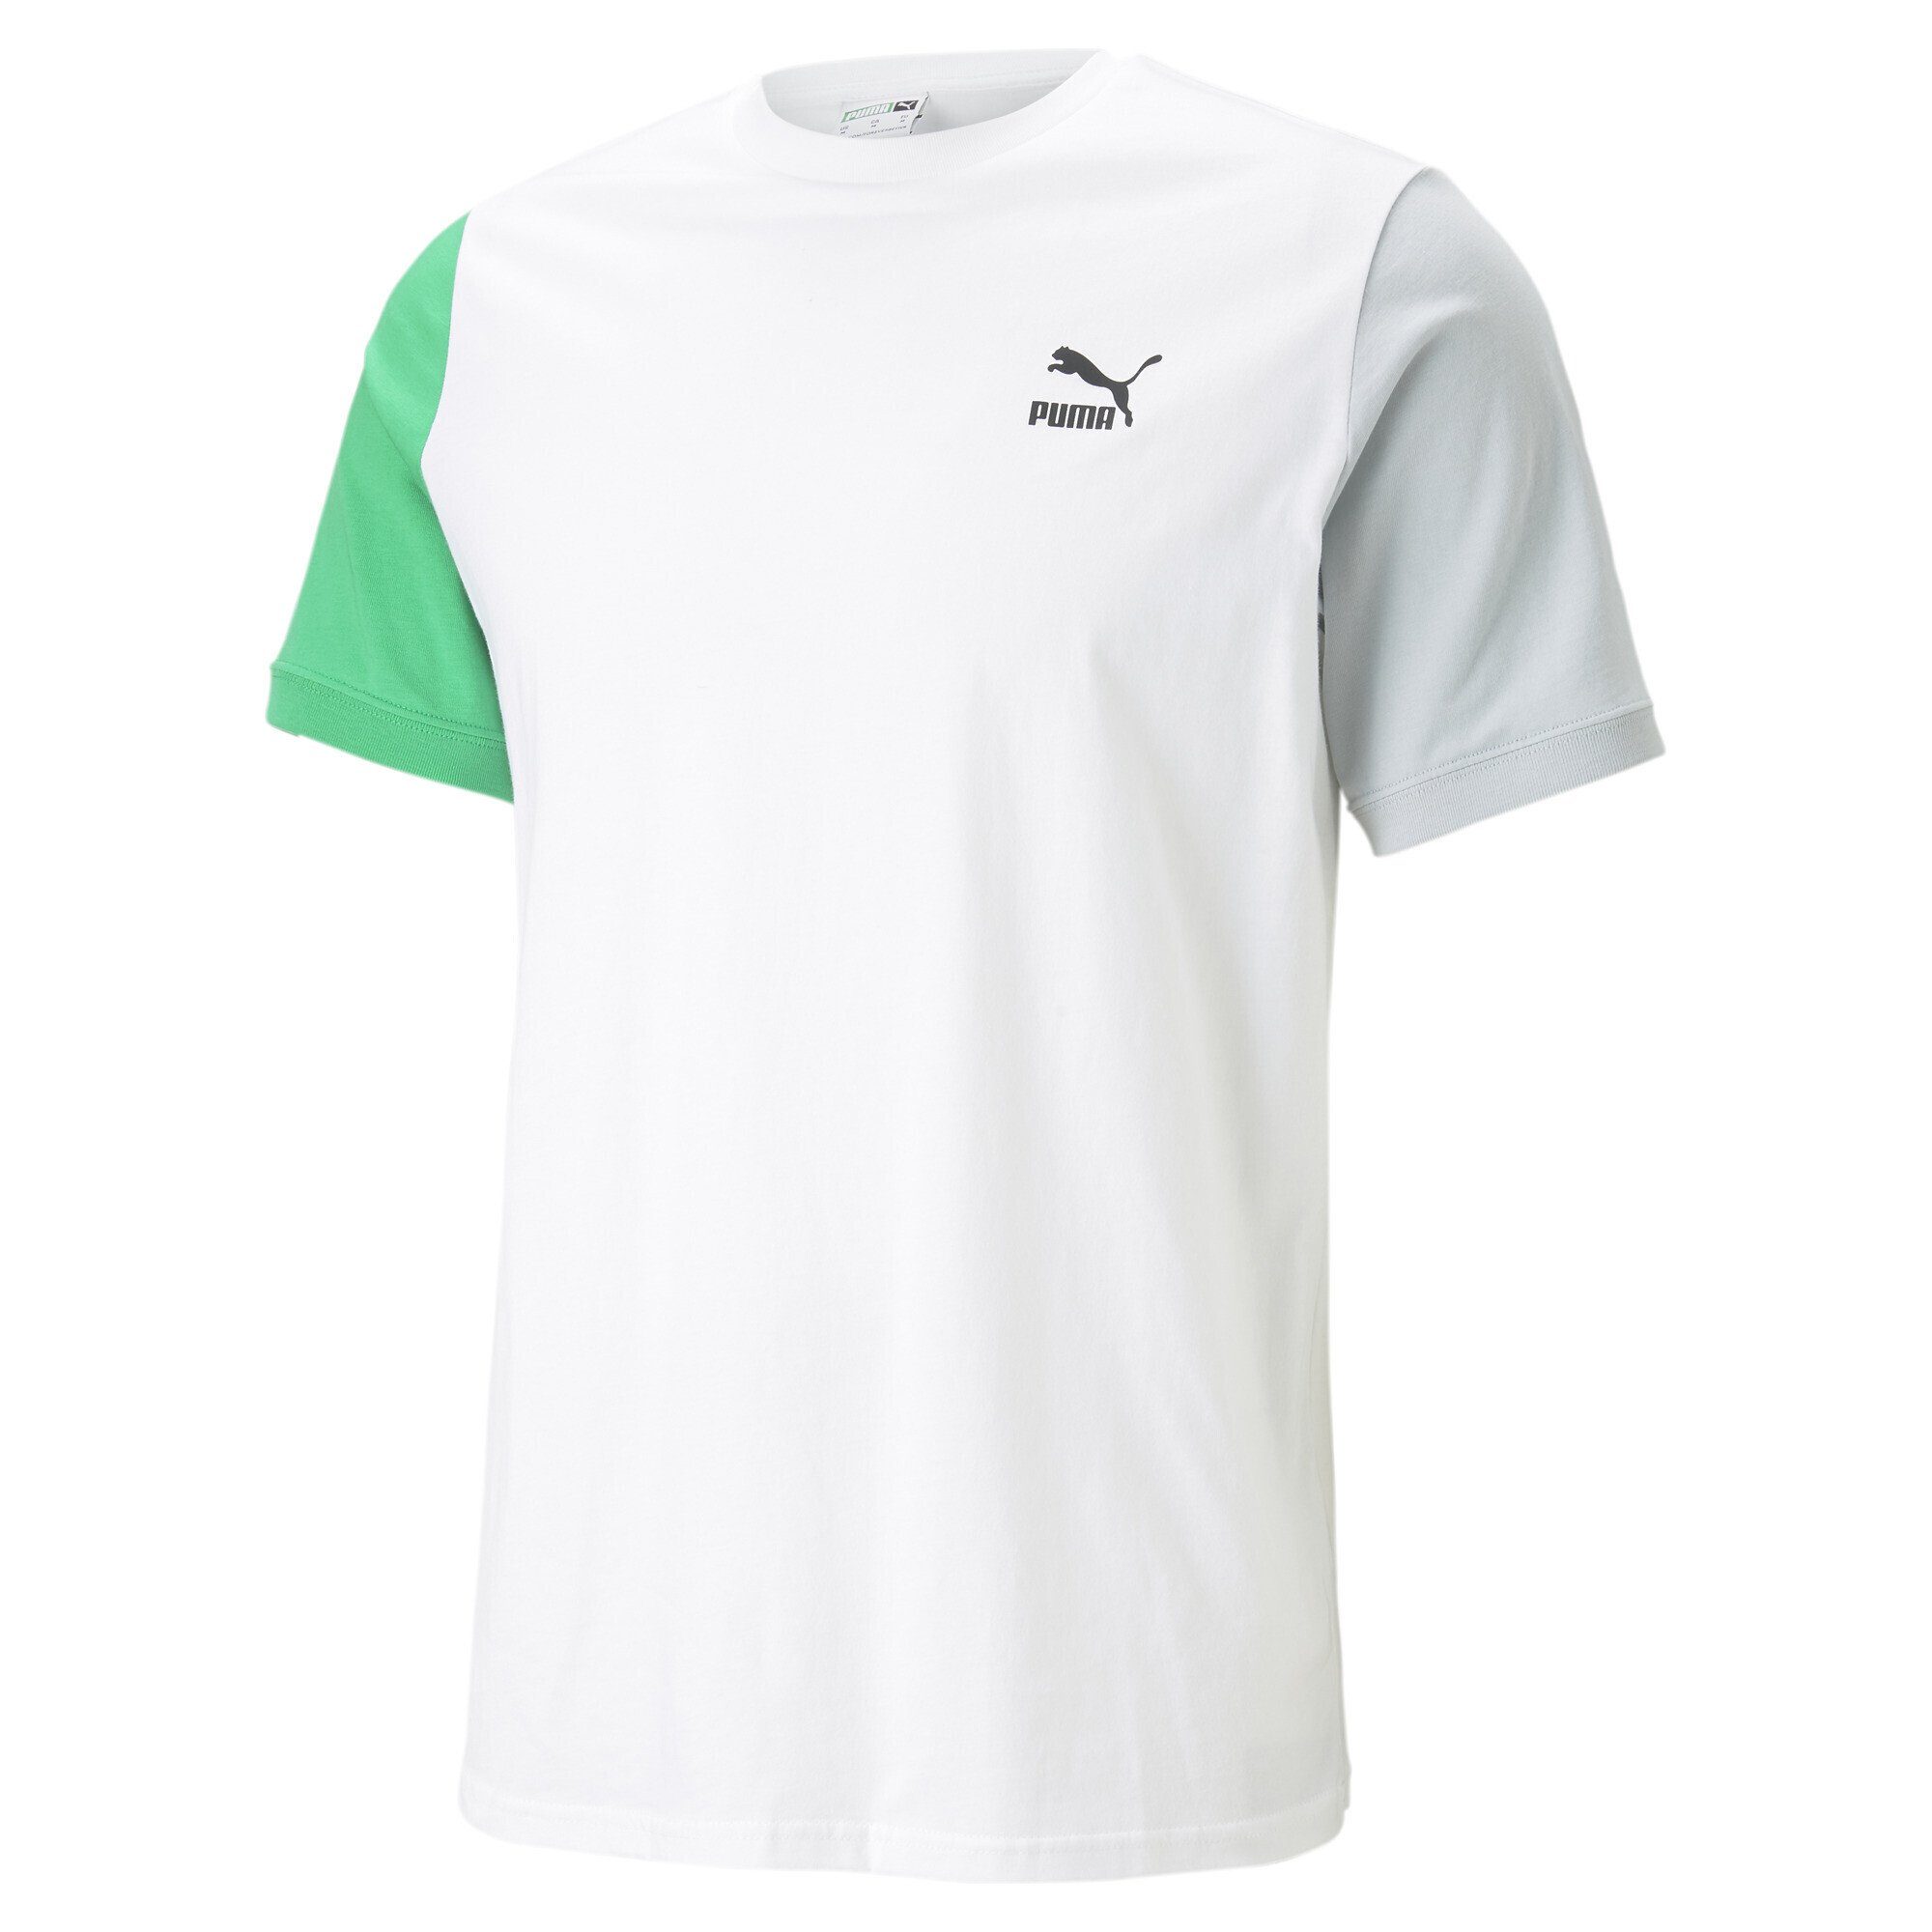 Direktversand von Produkten Classics Platinum Gray Block T-Shirt White Herren PUMA T-Shirt